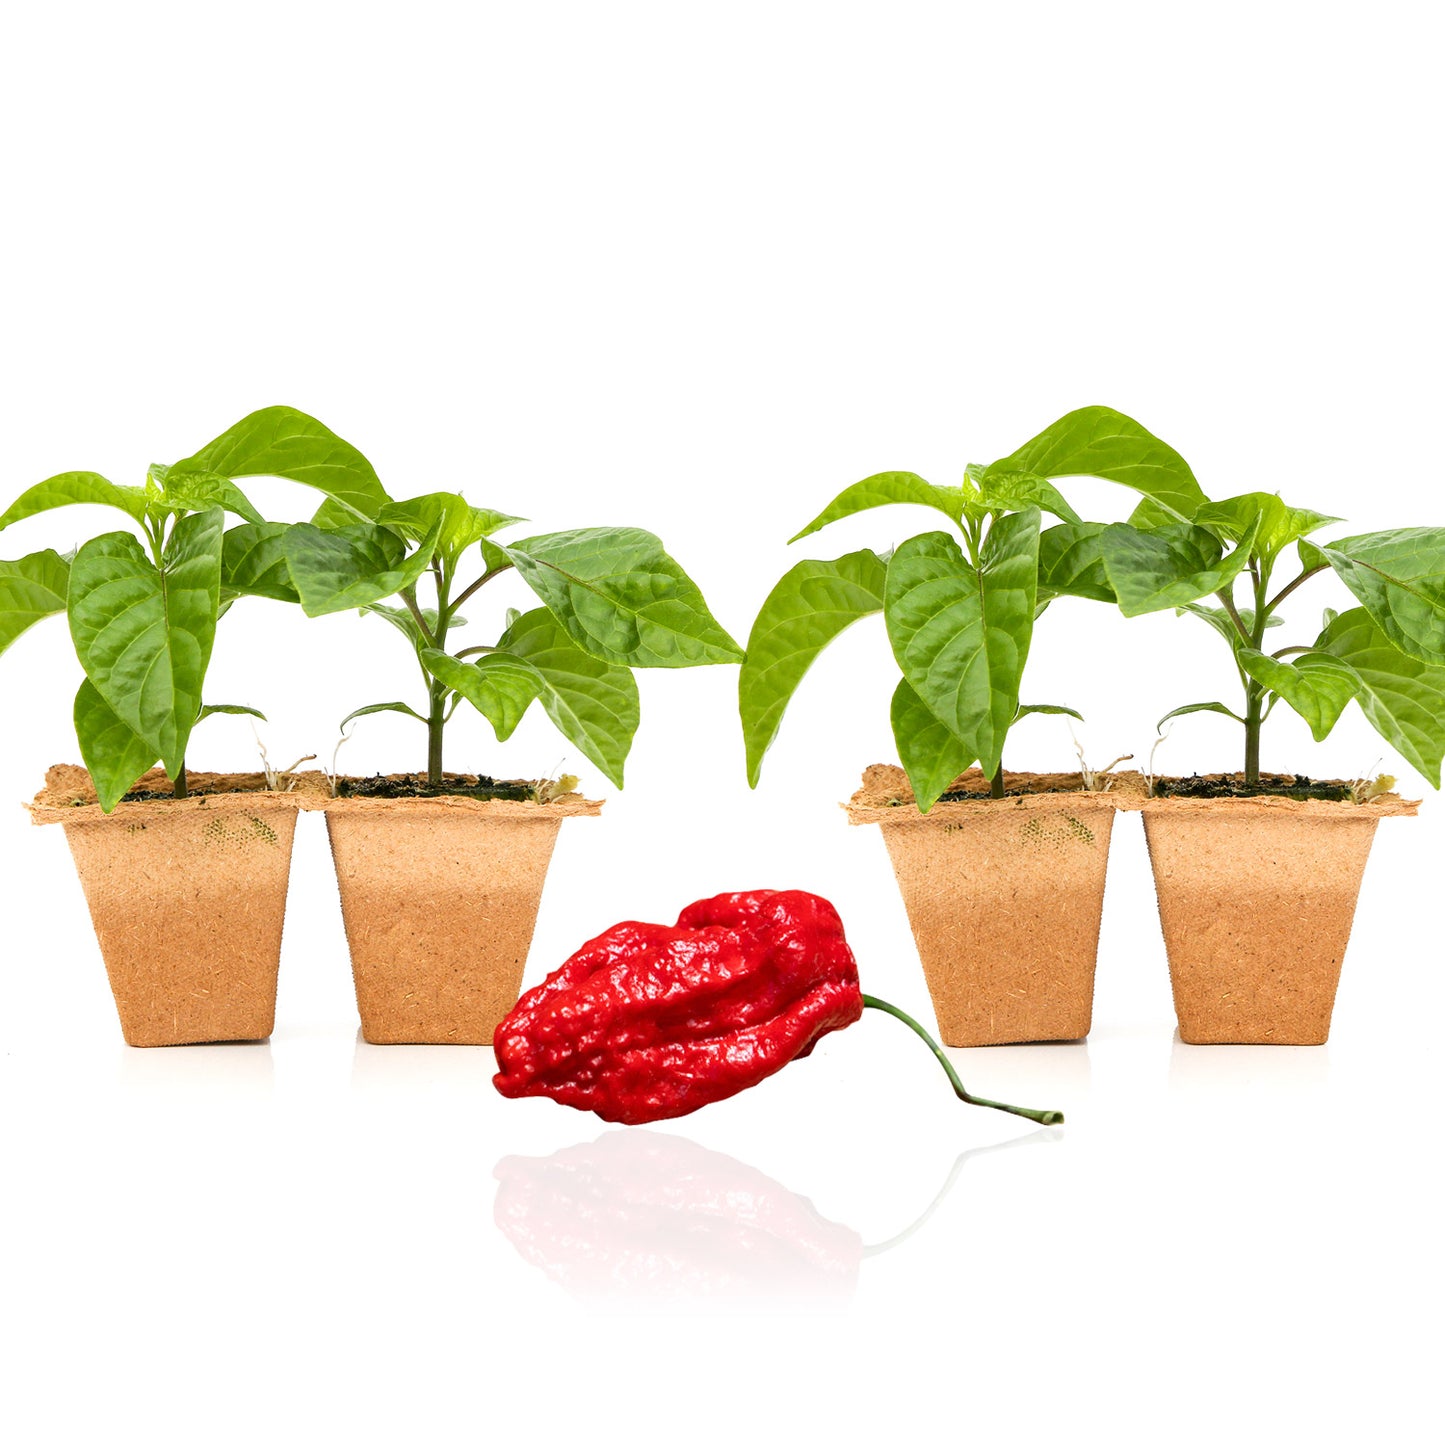 Pepper Joe's Apocalypse Scorpion plants for sale